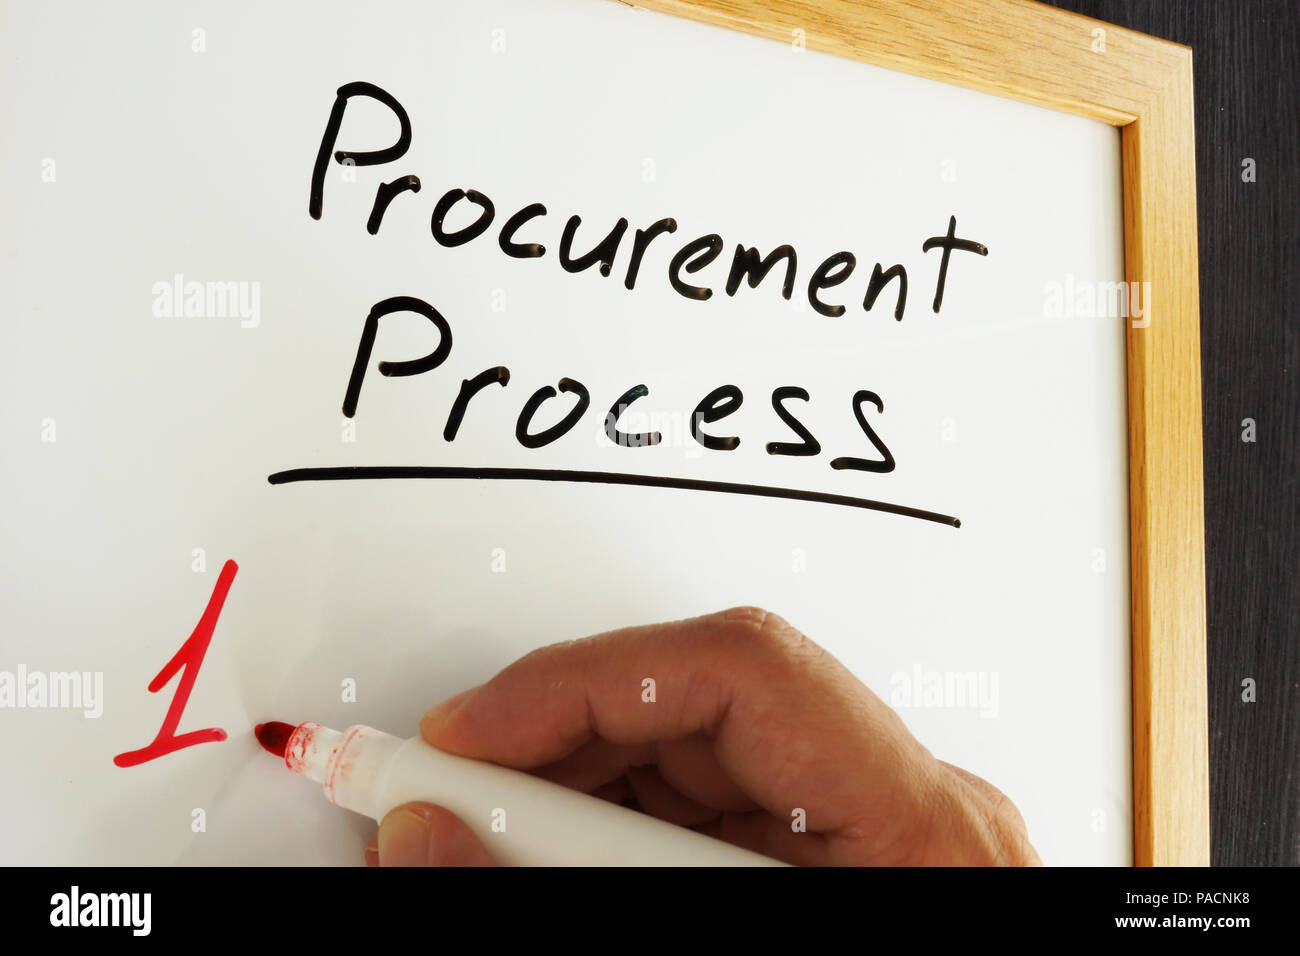 Procurement process handwritten by man on a white board. Stock Photo